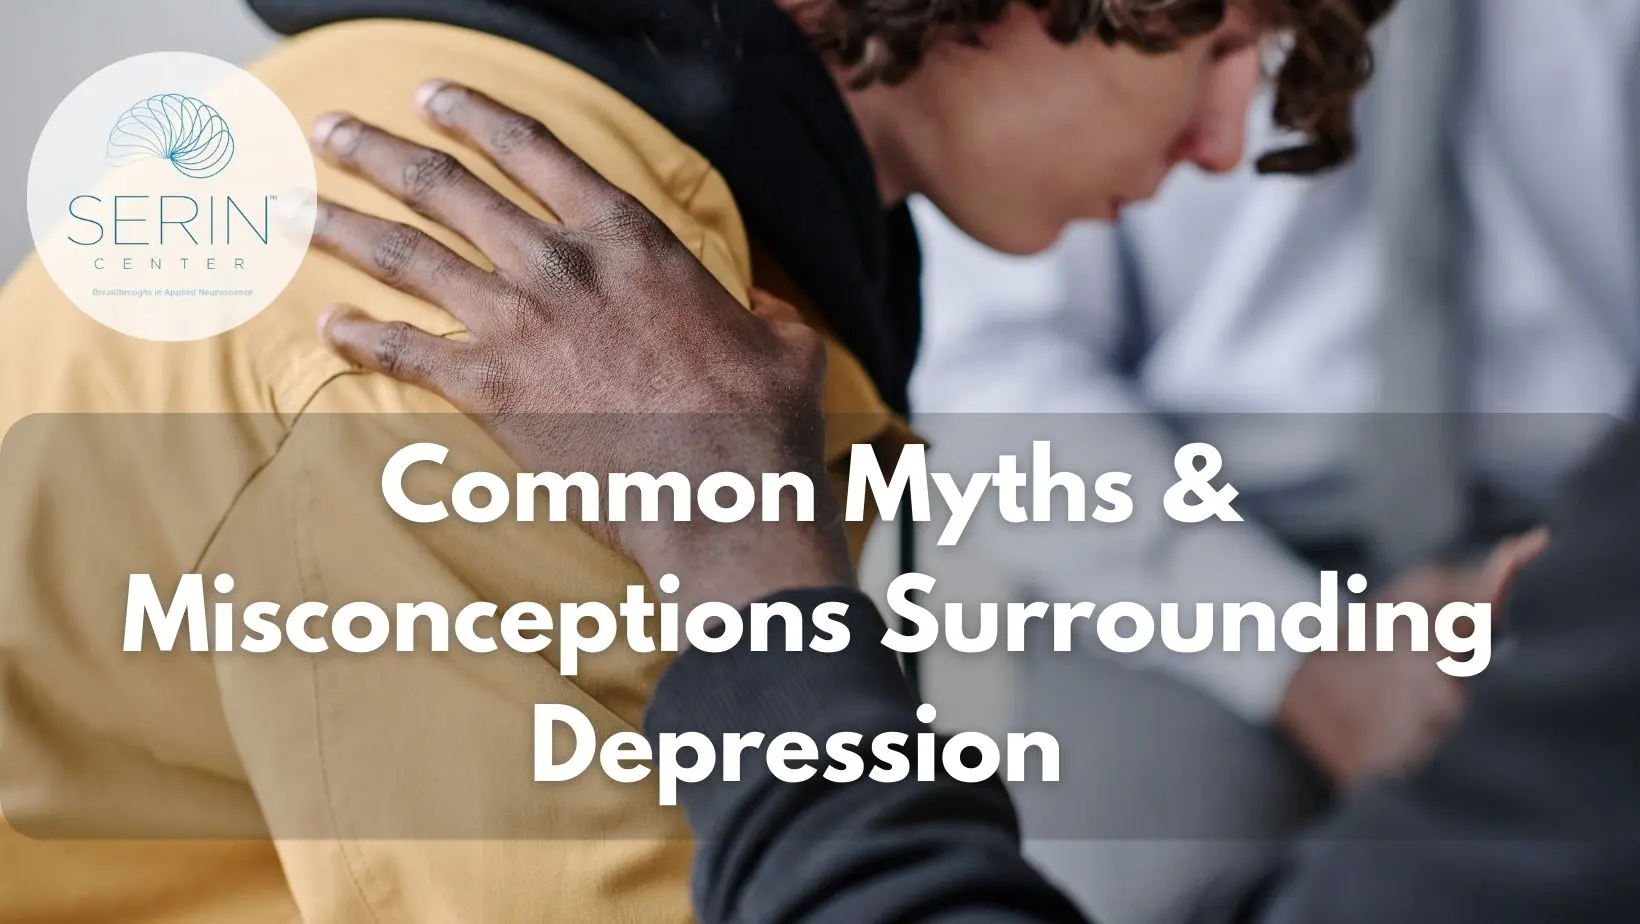 depression myths - Serin Center